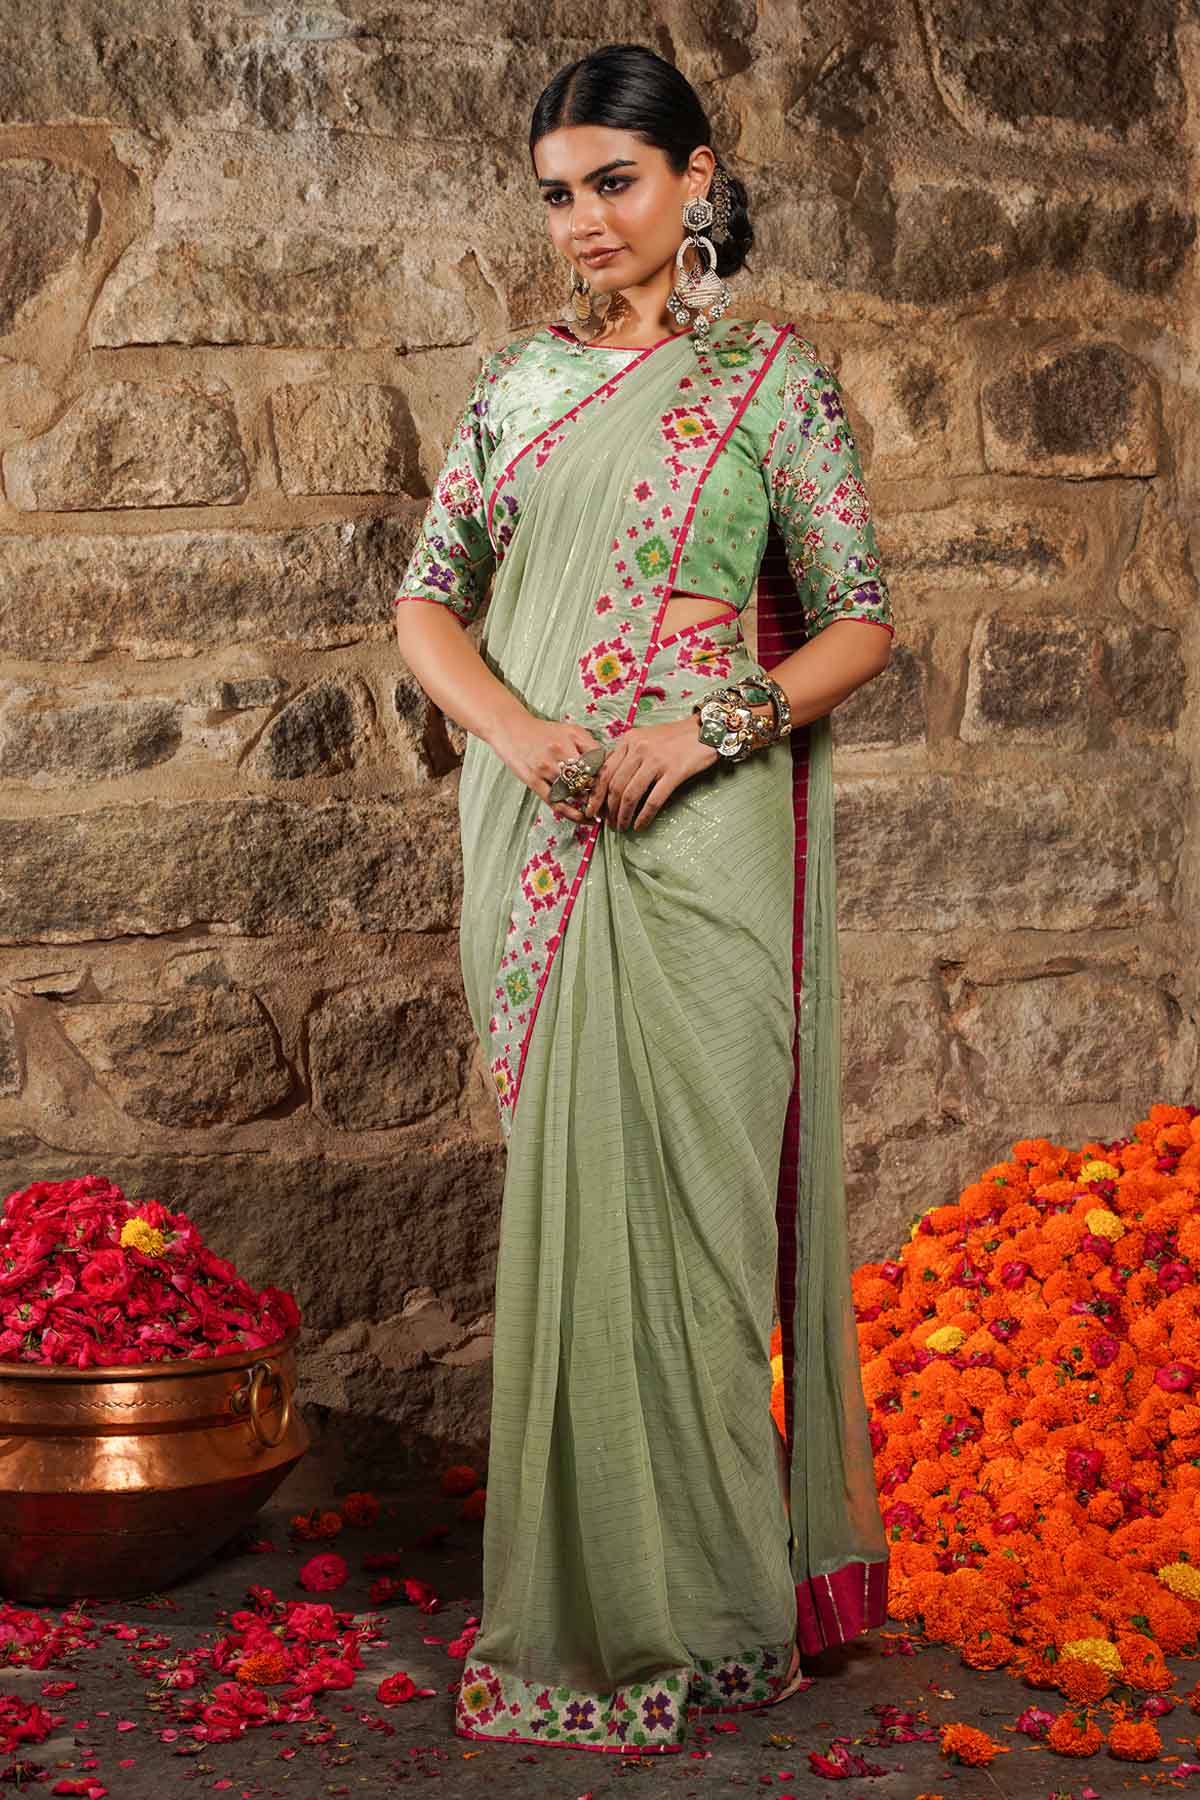 Seharre Green Stripes Pre-Draped Saree for women online at ScrollnShops